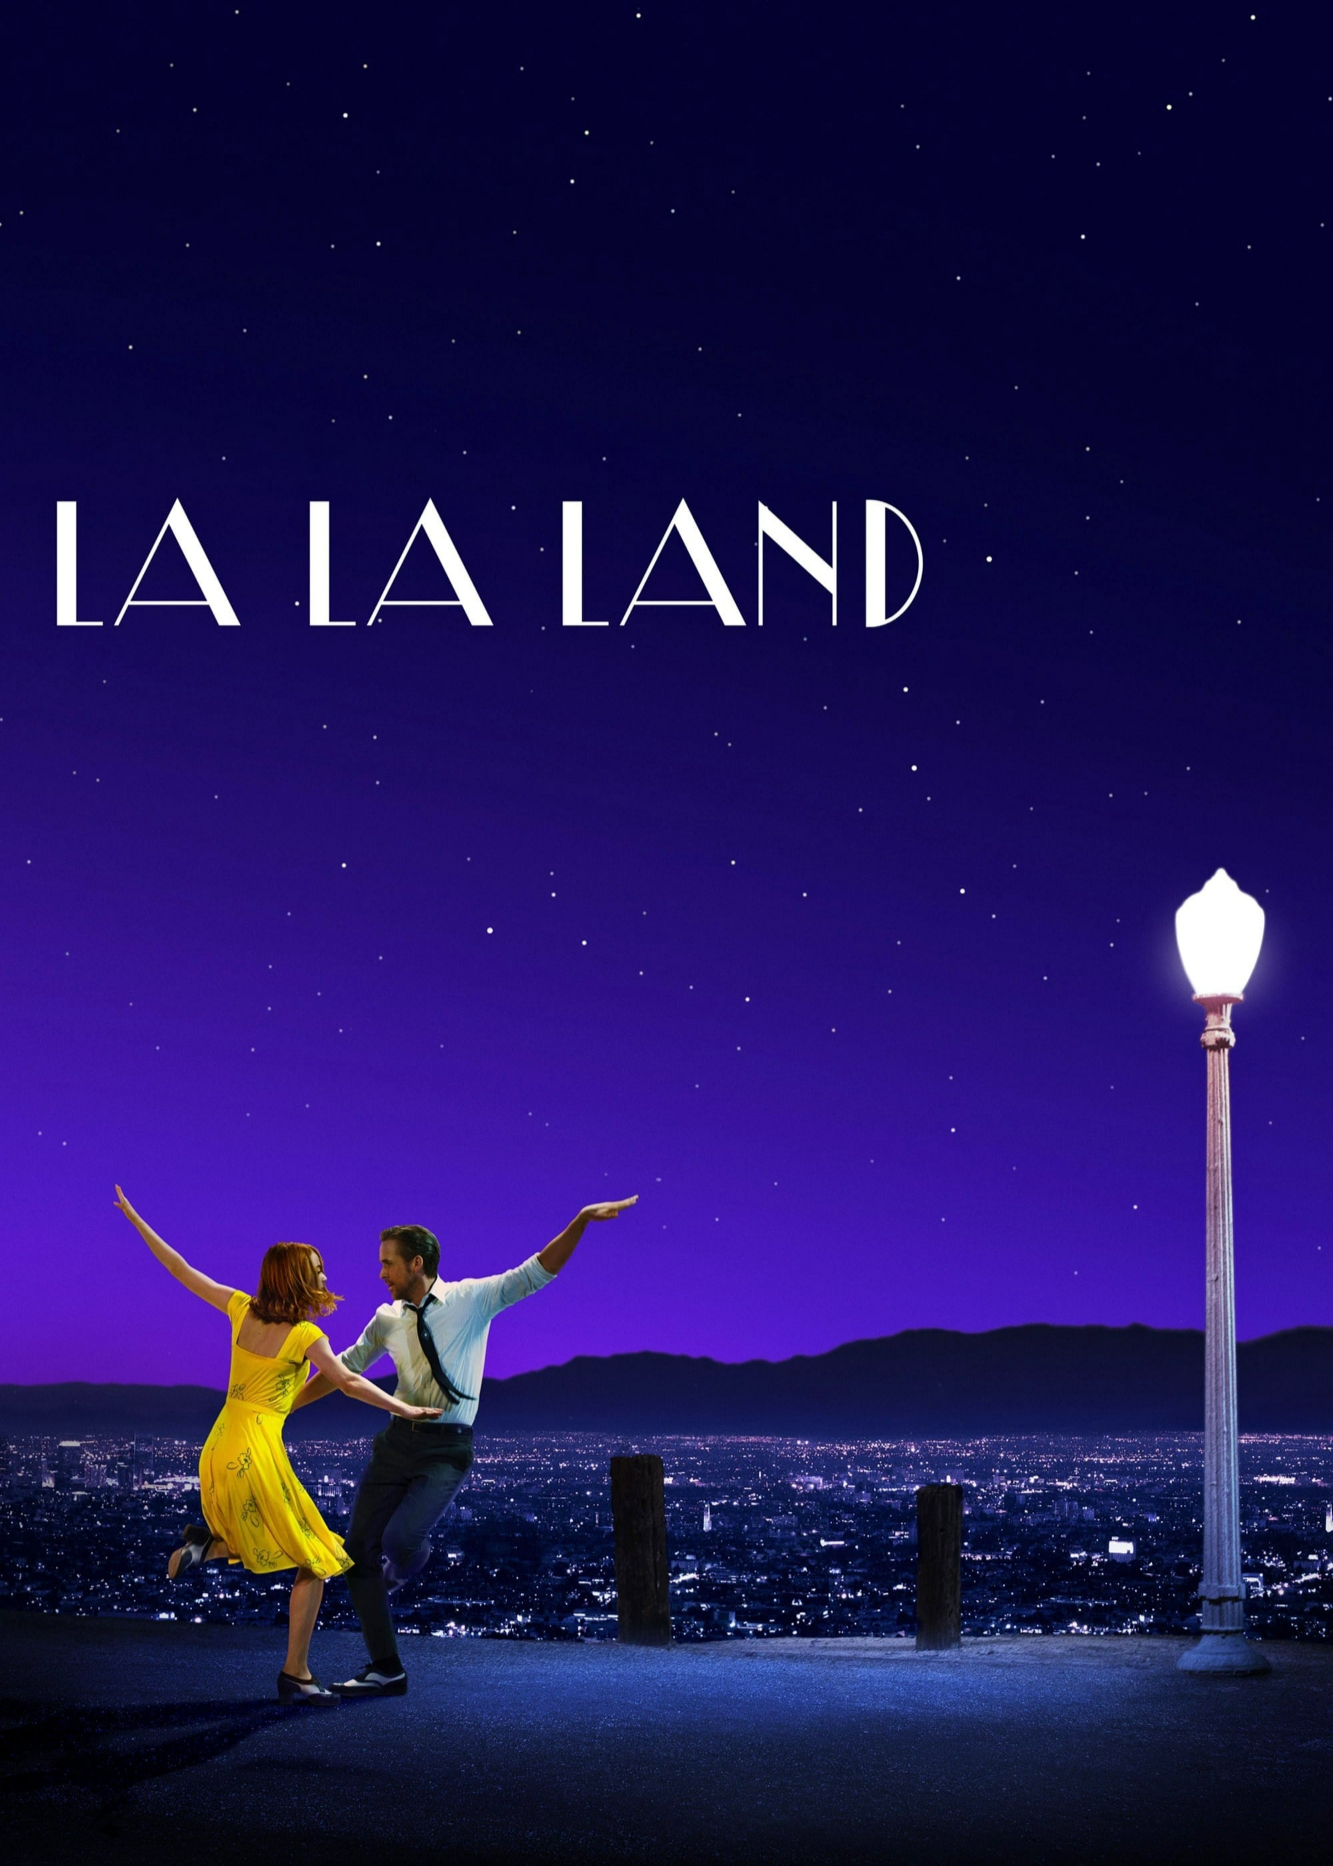 Poster Phim Những Kẻ Khờ Mộng Mơ (La La Land)